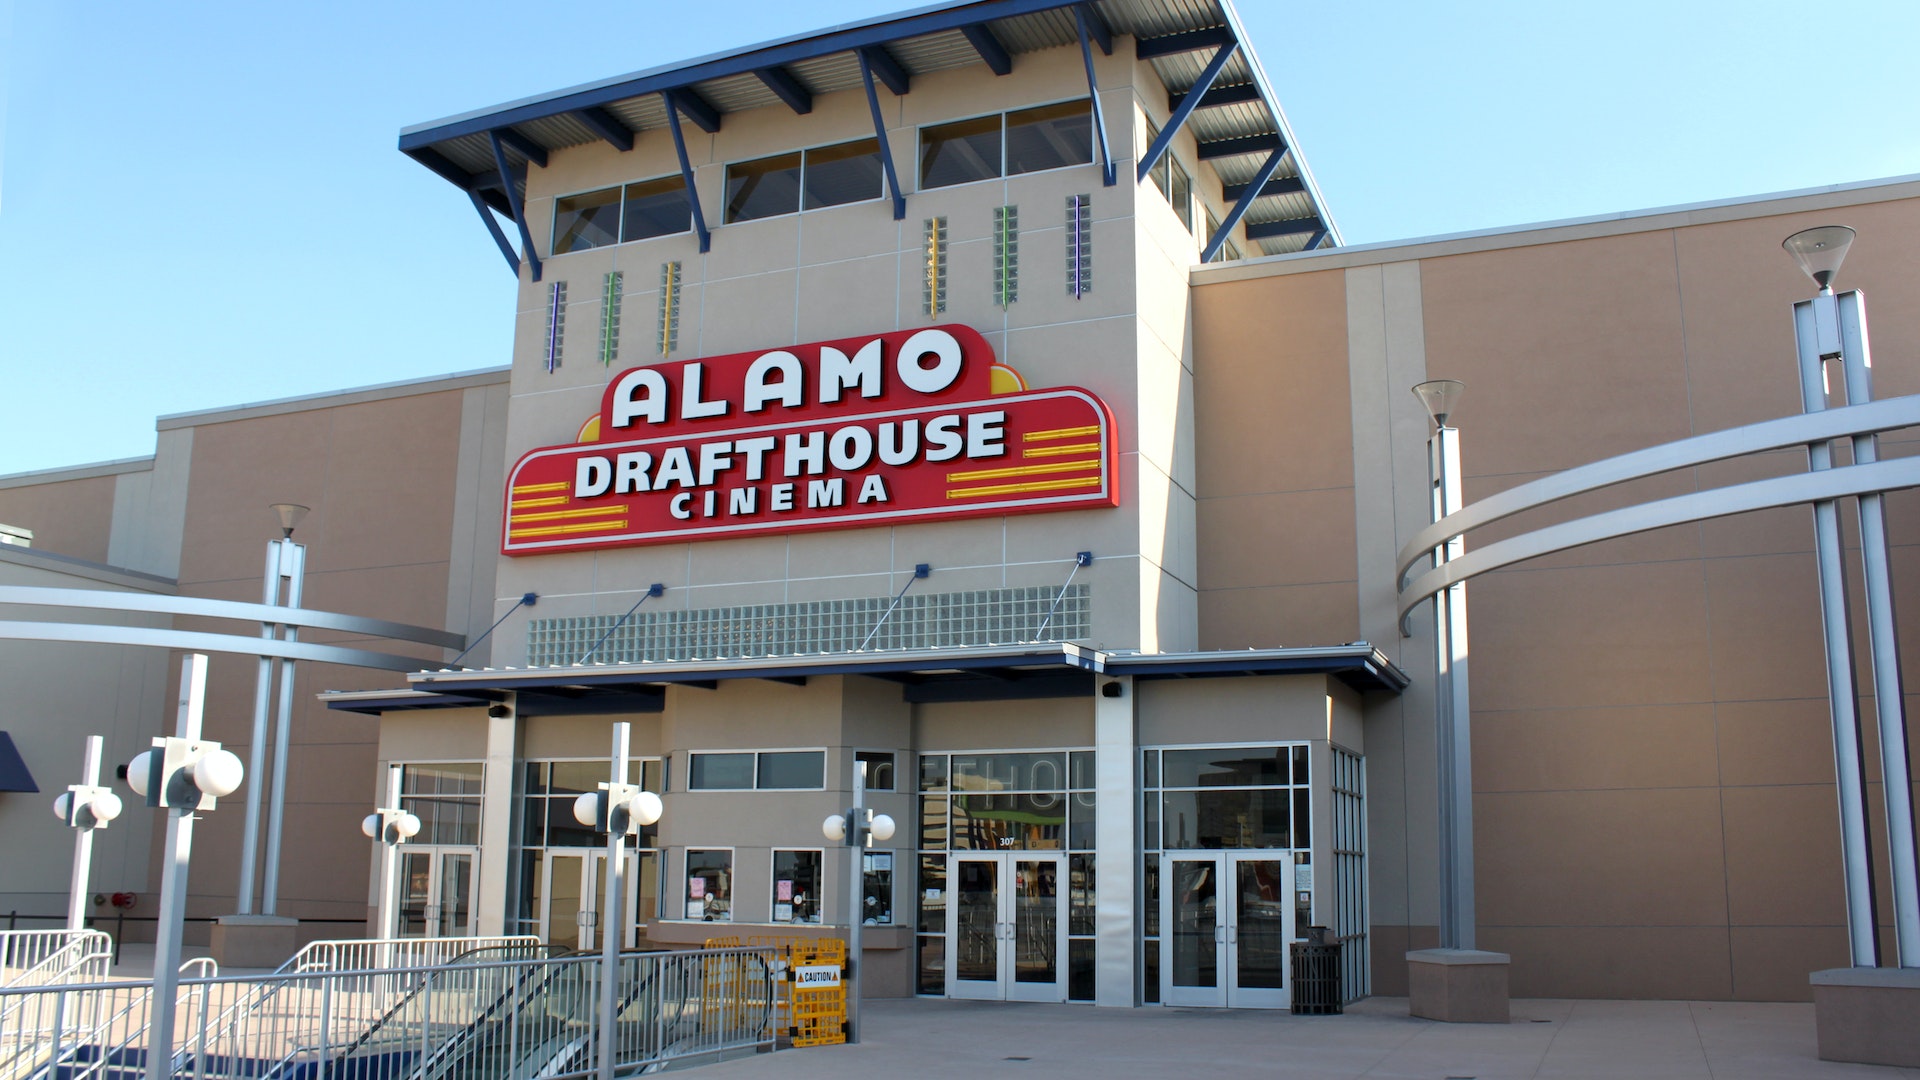 Alamo Drafthouse Cinema building